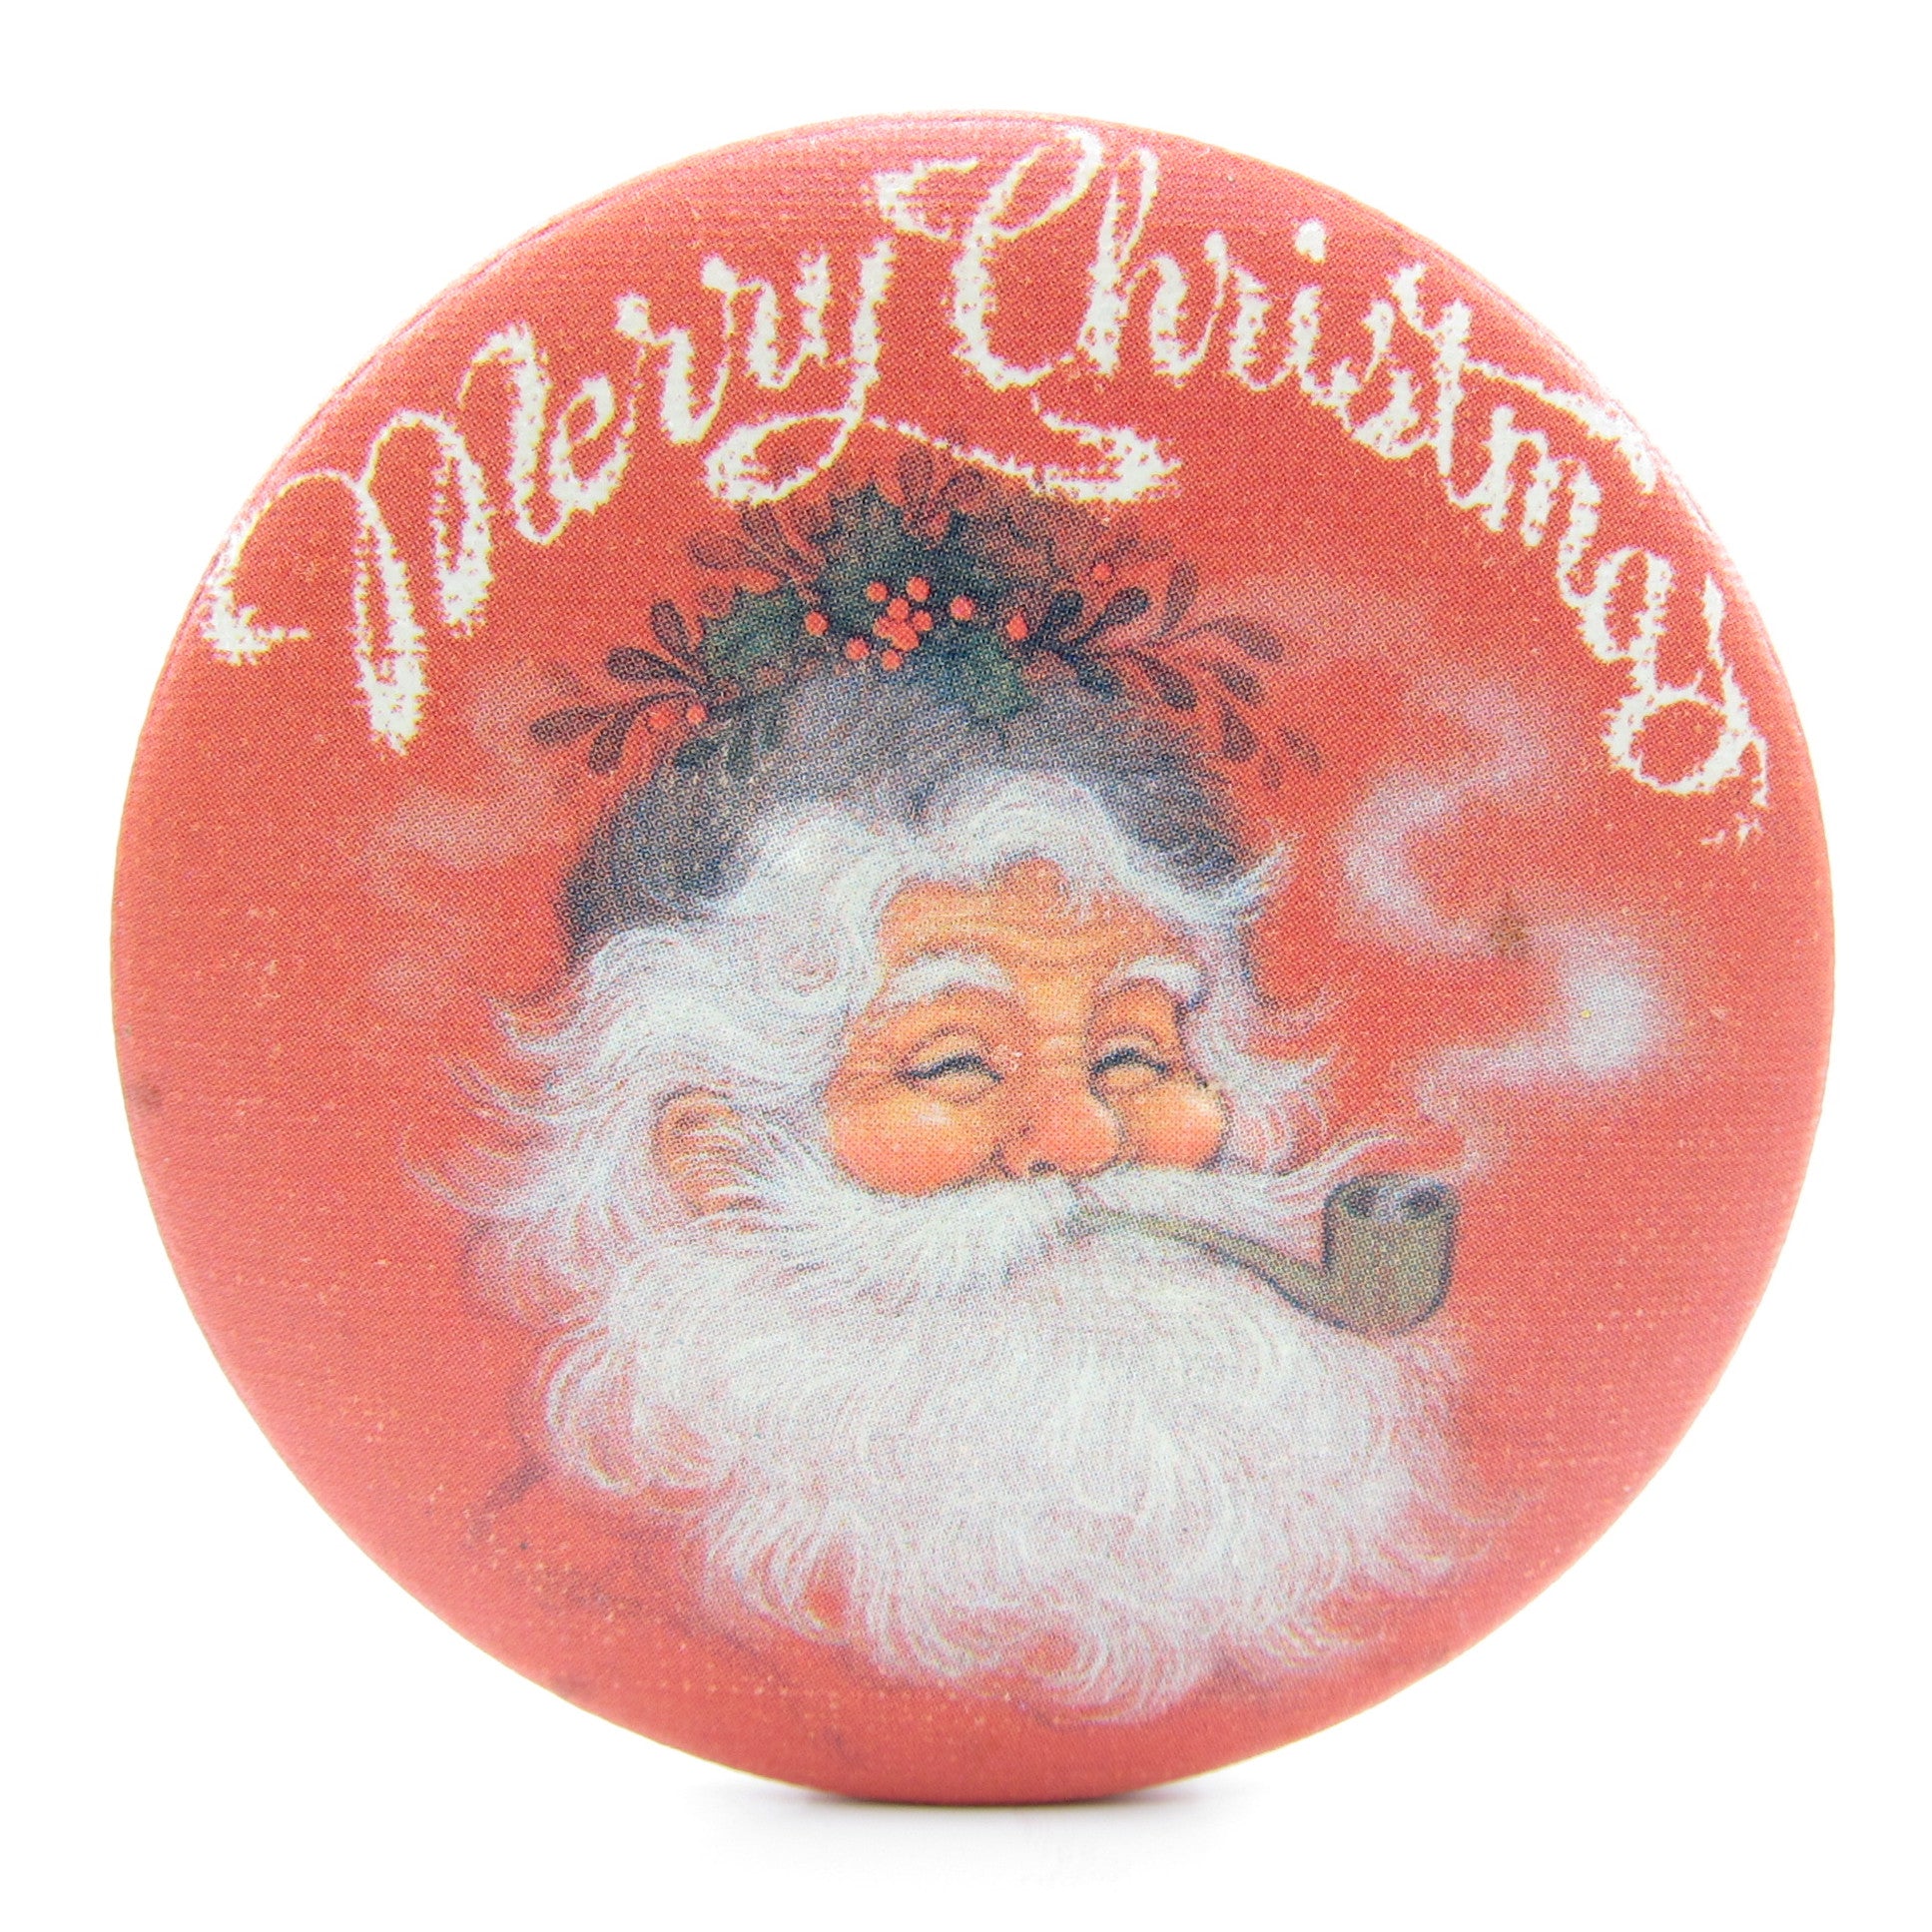 Vintage Hallmark Merry Christmas pin-back button pin with Santa Claus smoking a pipe